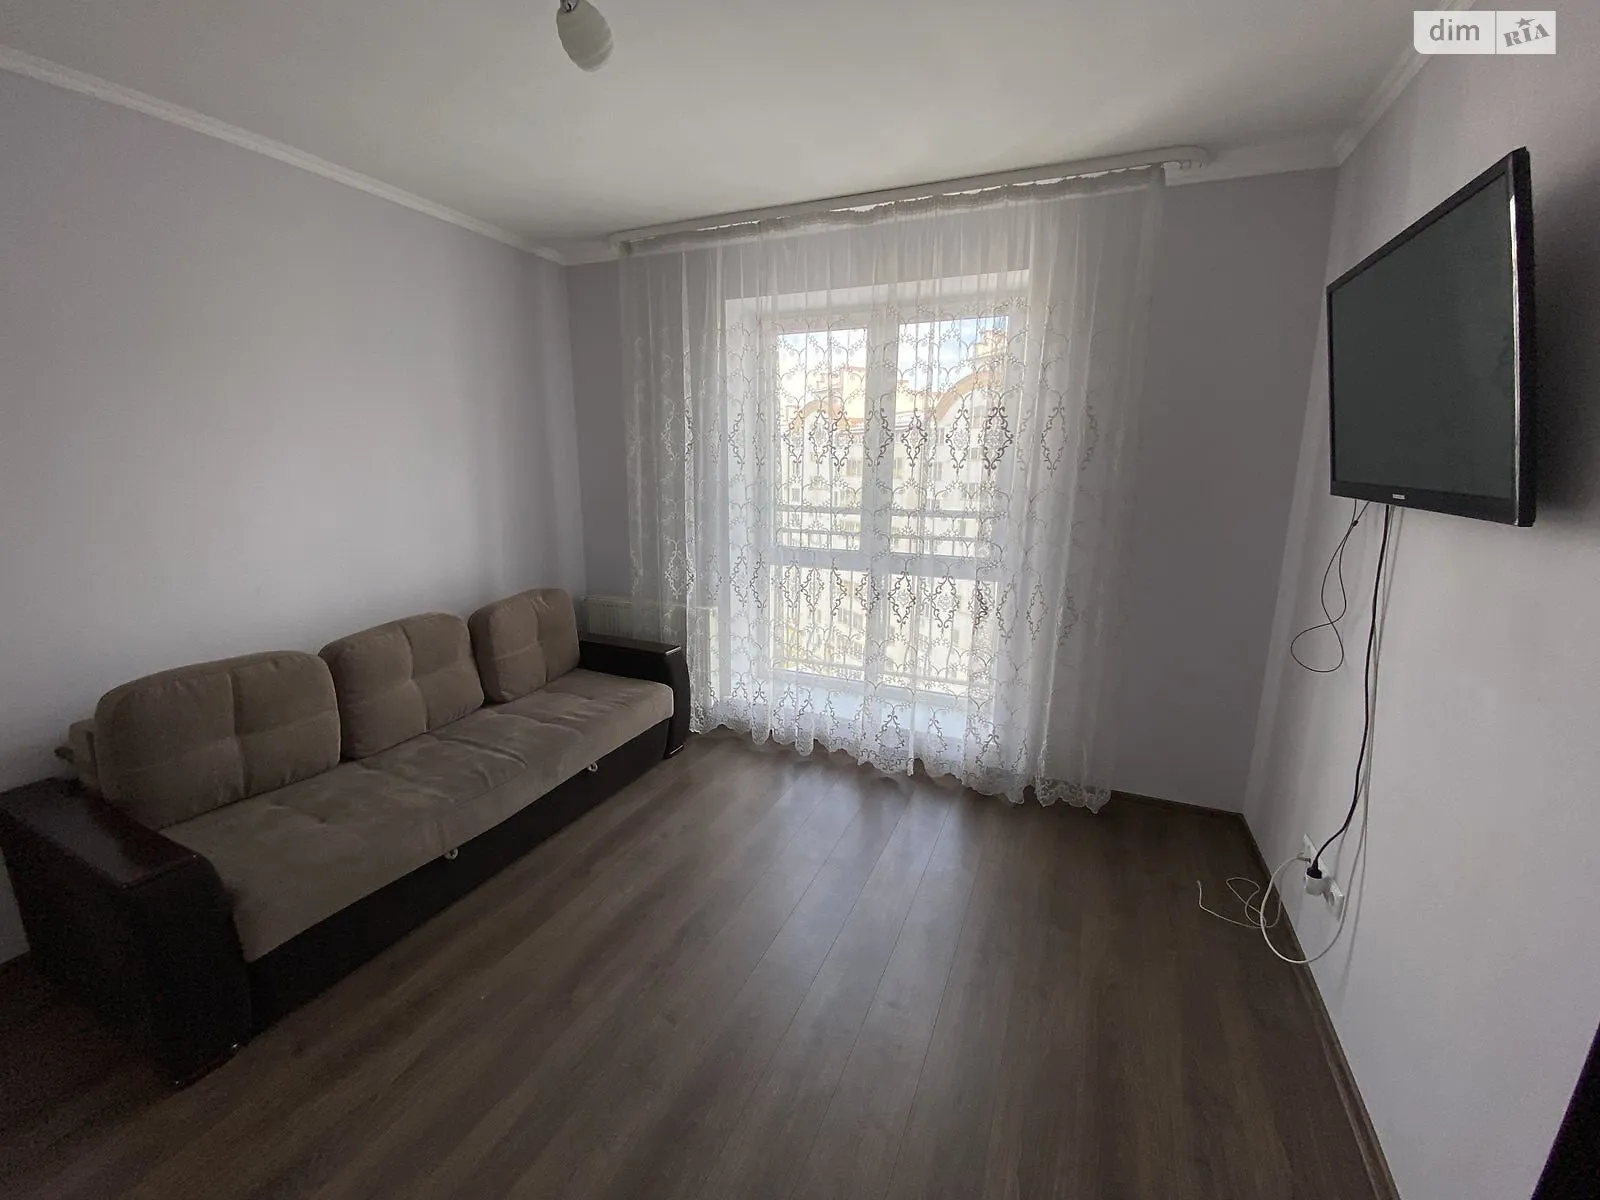 Сдается в аренду 2-комнатная квартира 63 кв. м в Ивано-Франковске - фото 2